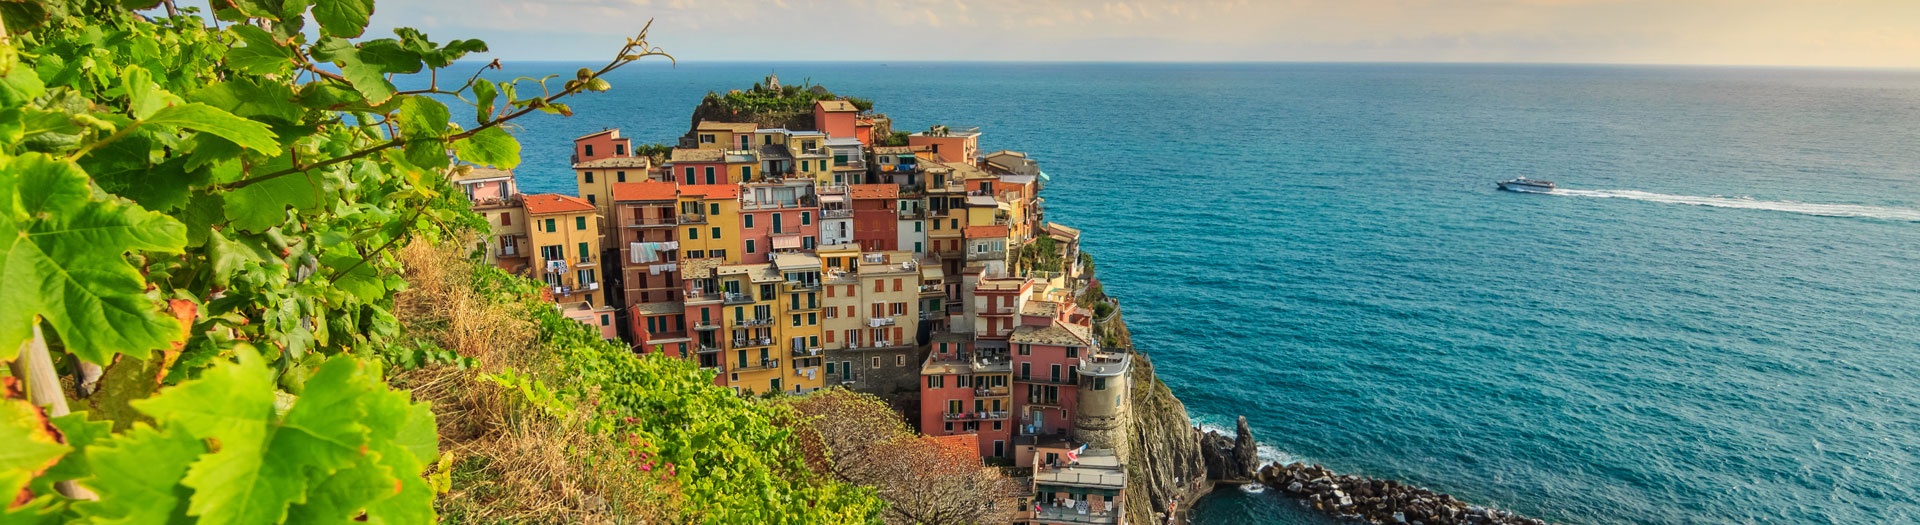 Les Cinque Terre & Portofino : la Dolce Vita en mode outdoor